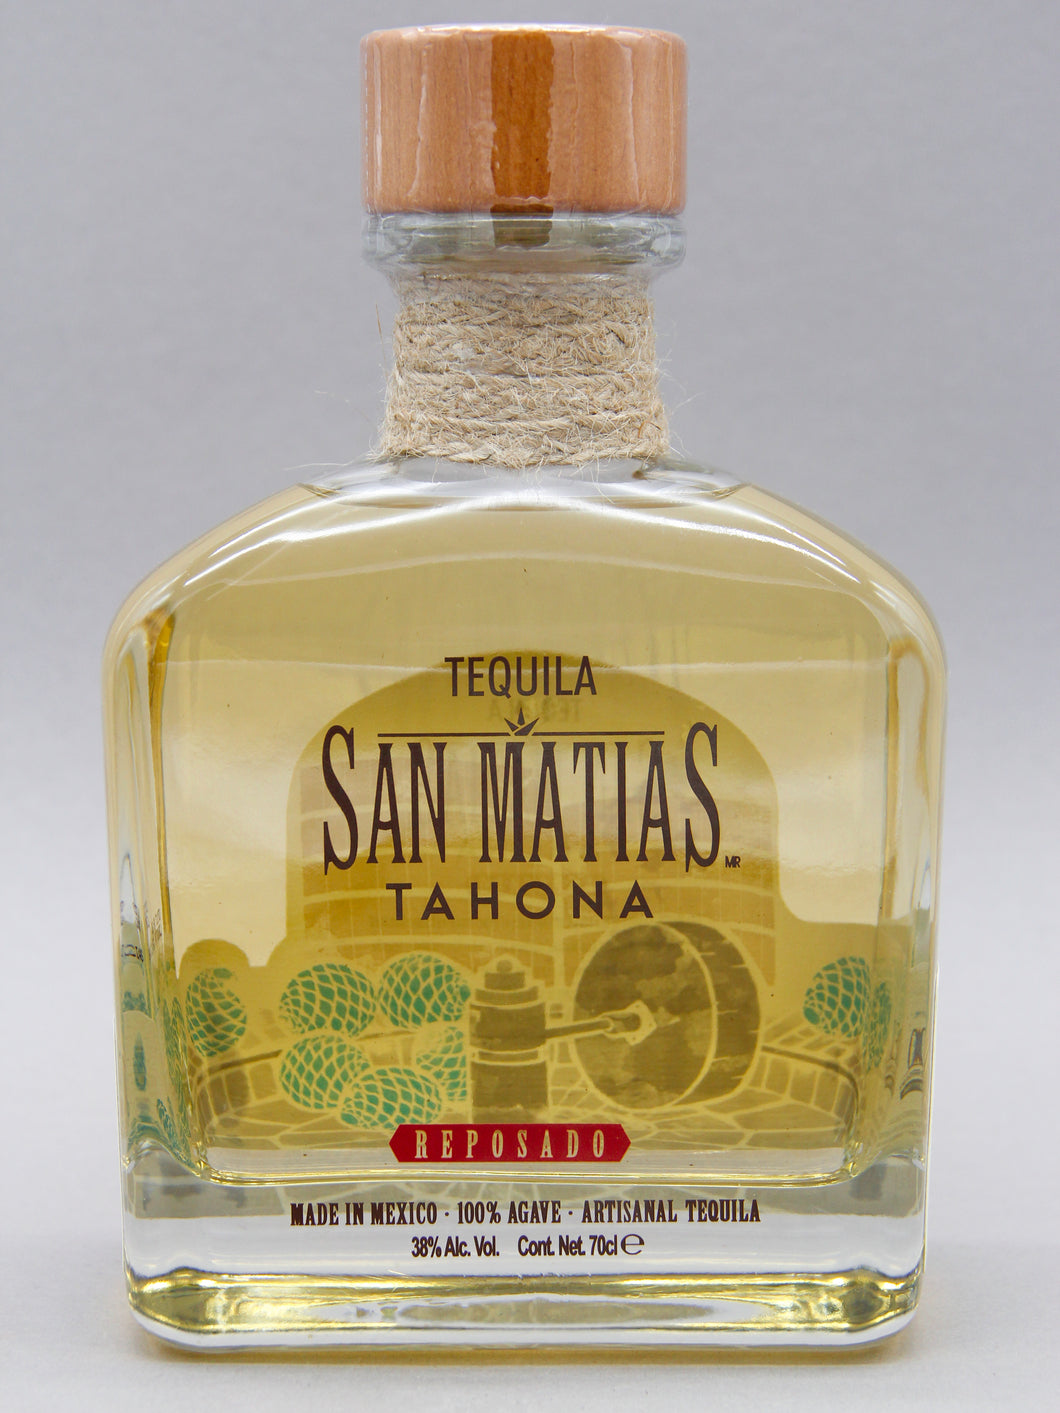 San Matias Tahona, Tequila Reposado (38%, 70cl)